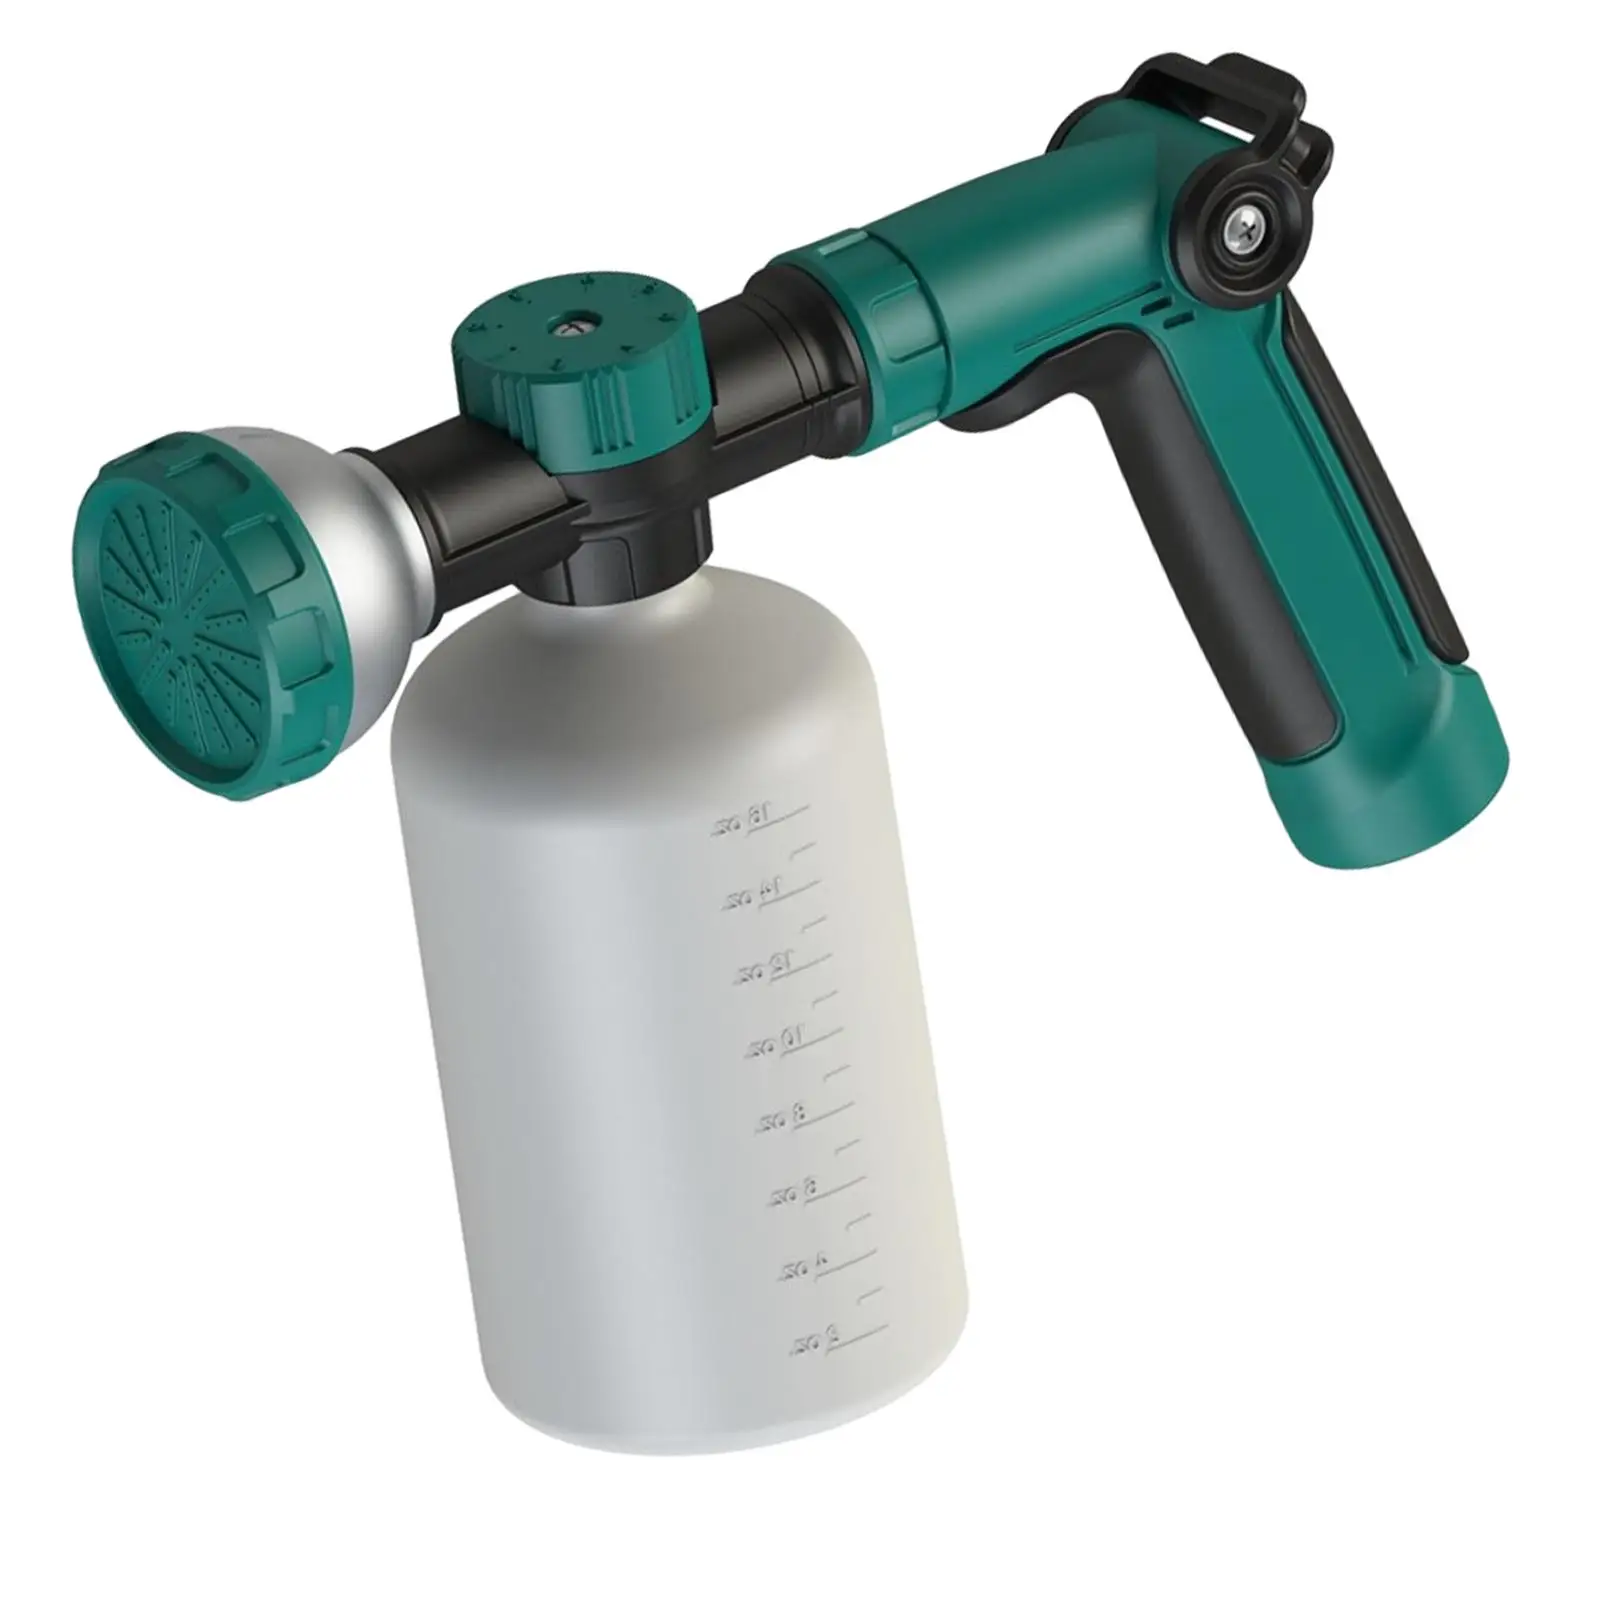 

Foam Sprayer Manual Tool Water Sprayer Hand Pressure Pump Sprayer for Pets Shower Lawn Plants Watering Car Washer Garden